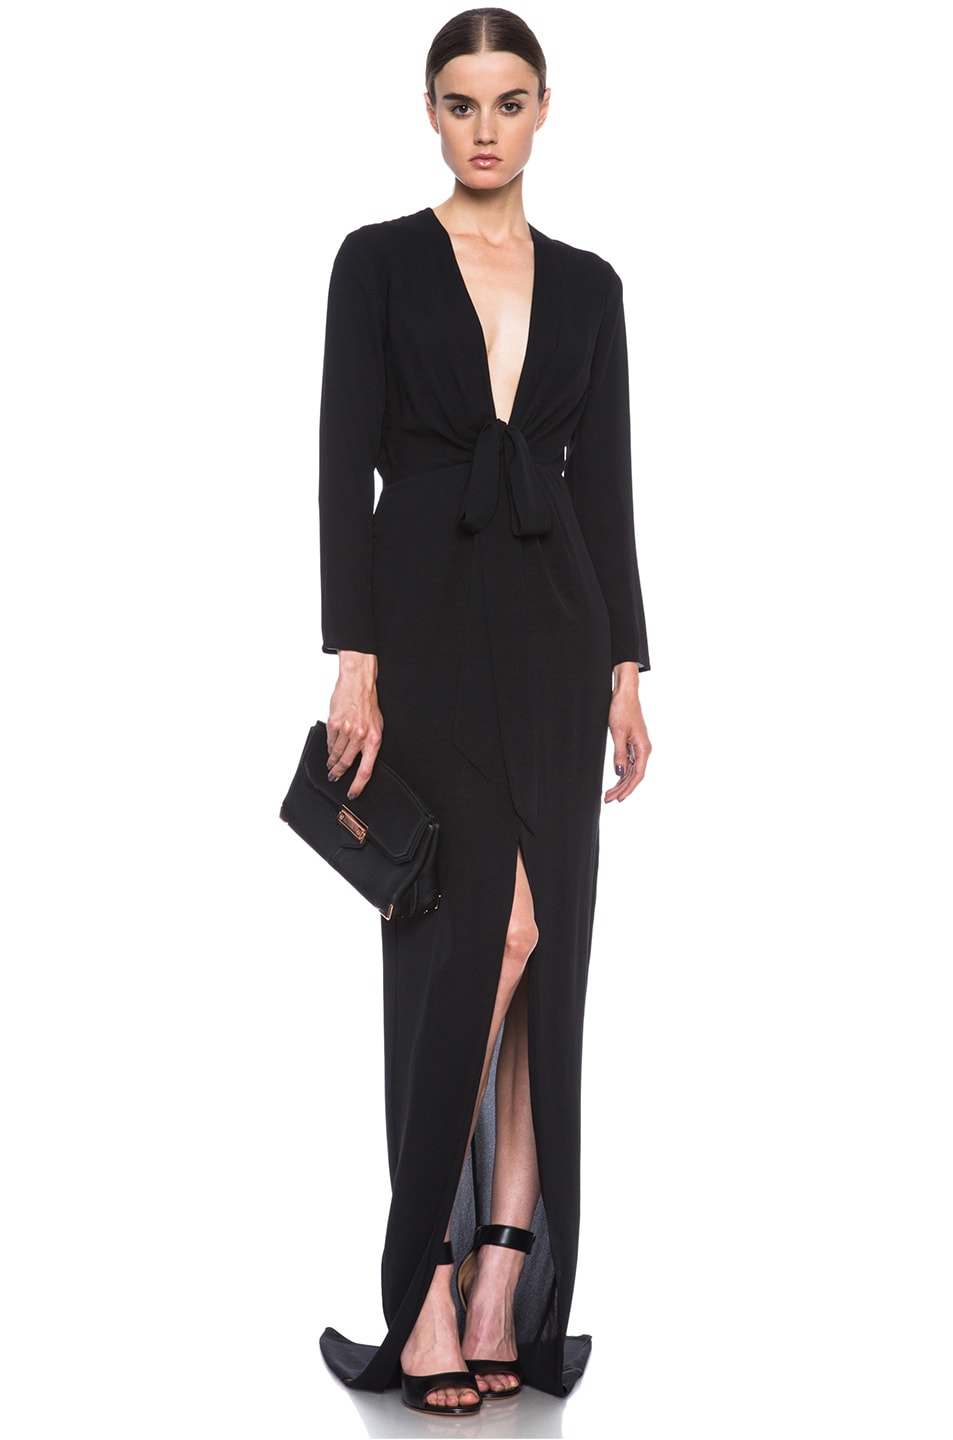 Jenni Kayne Plunge Silk Gown in Black | FWRD